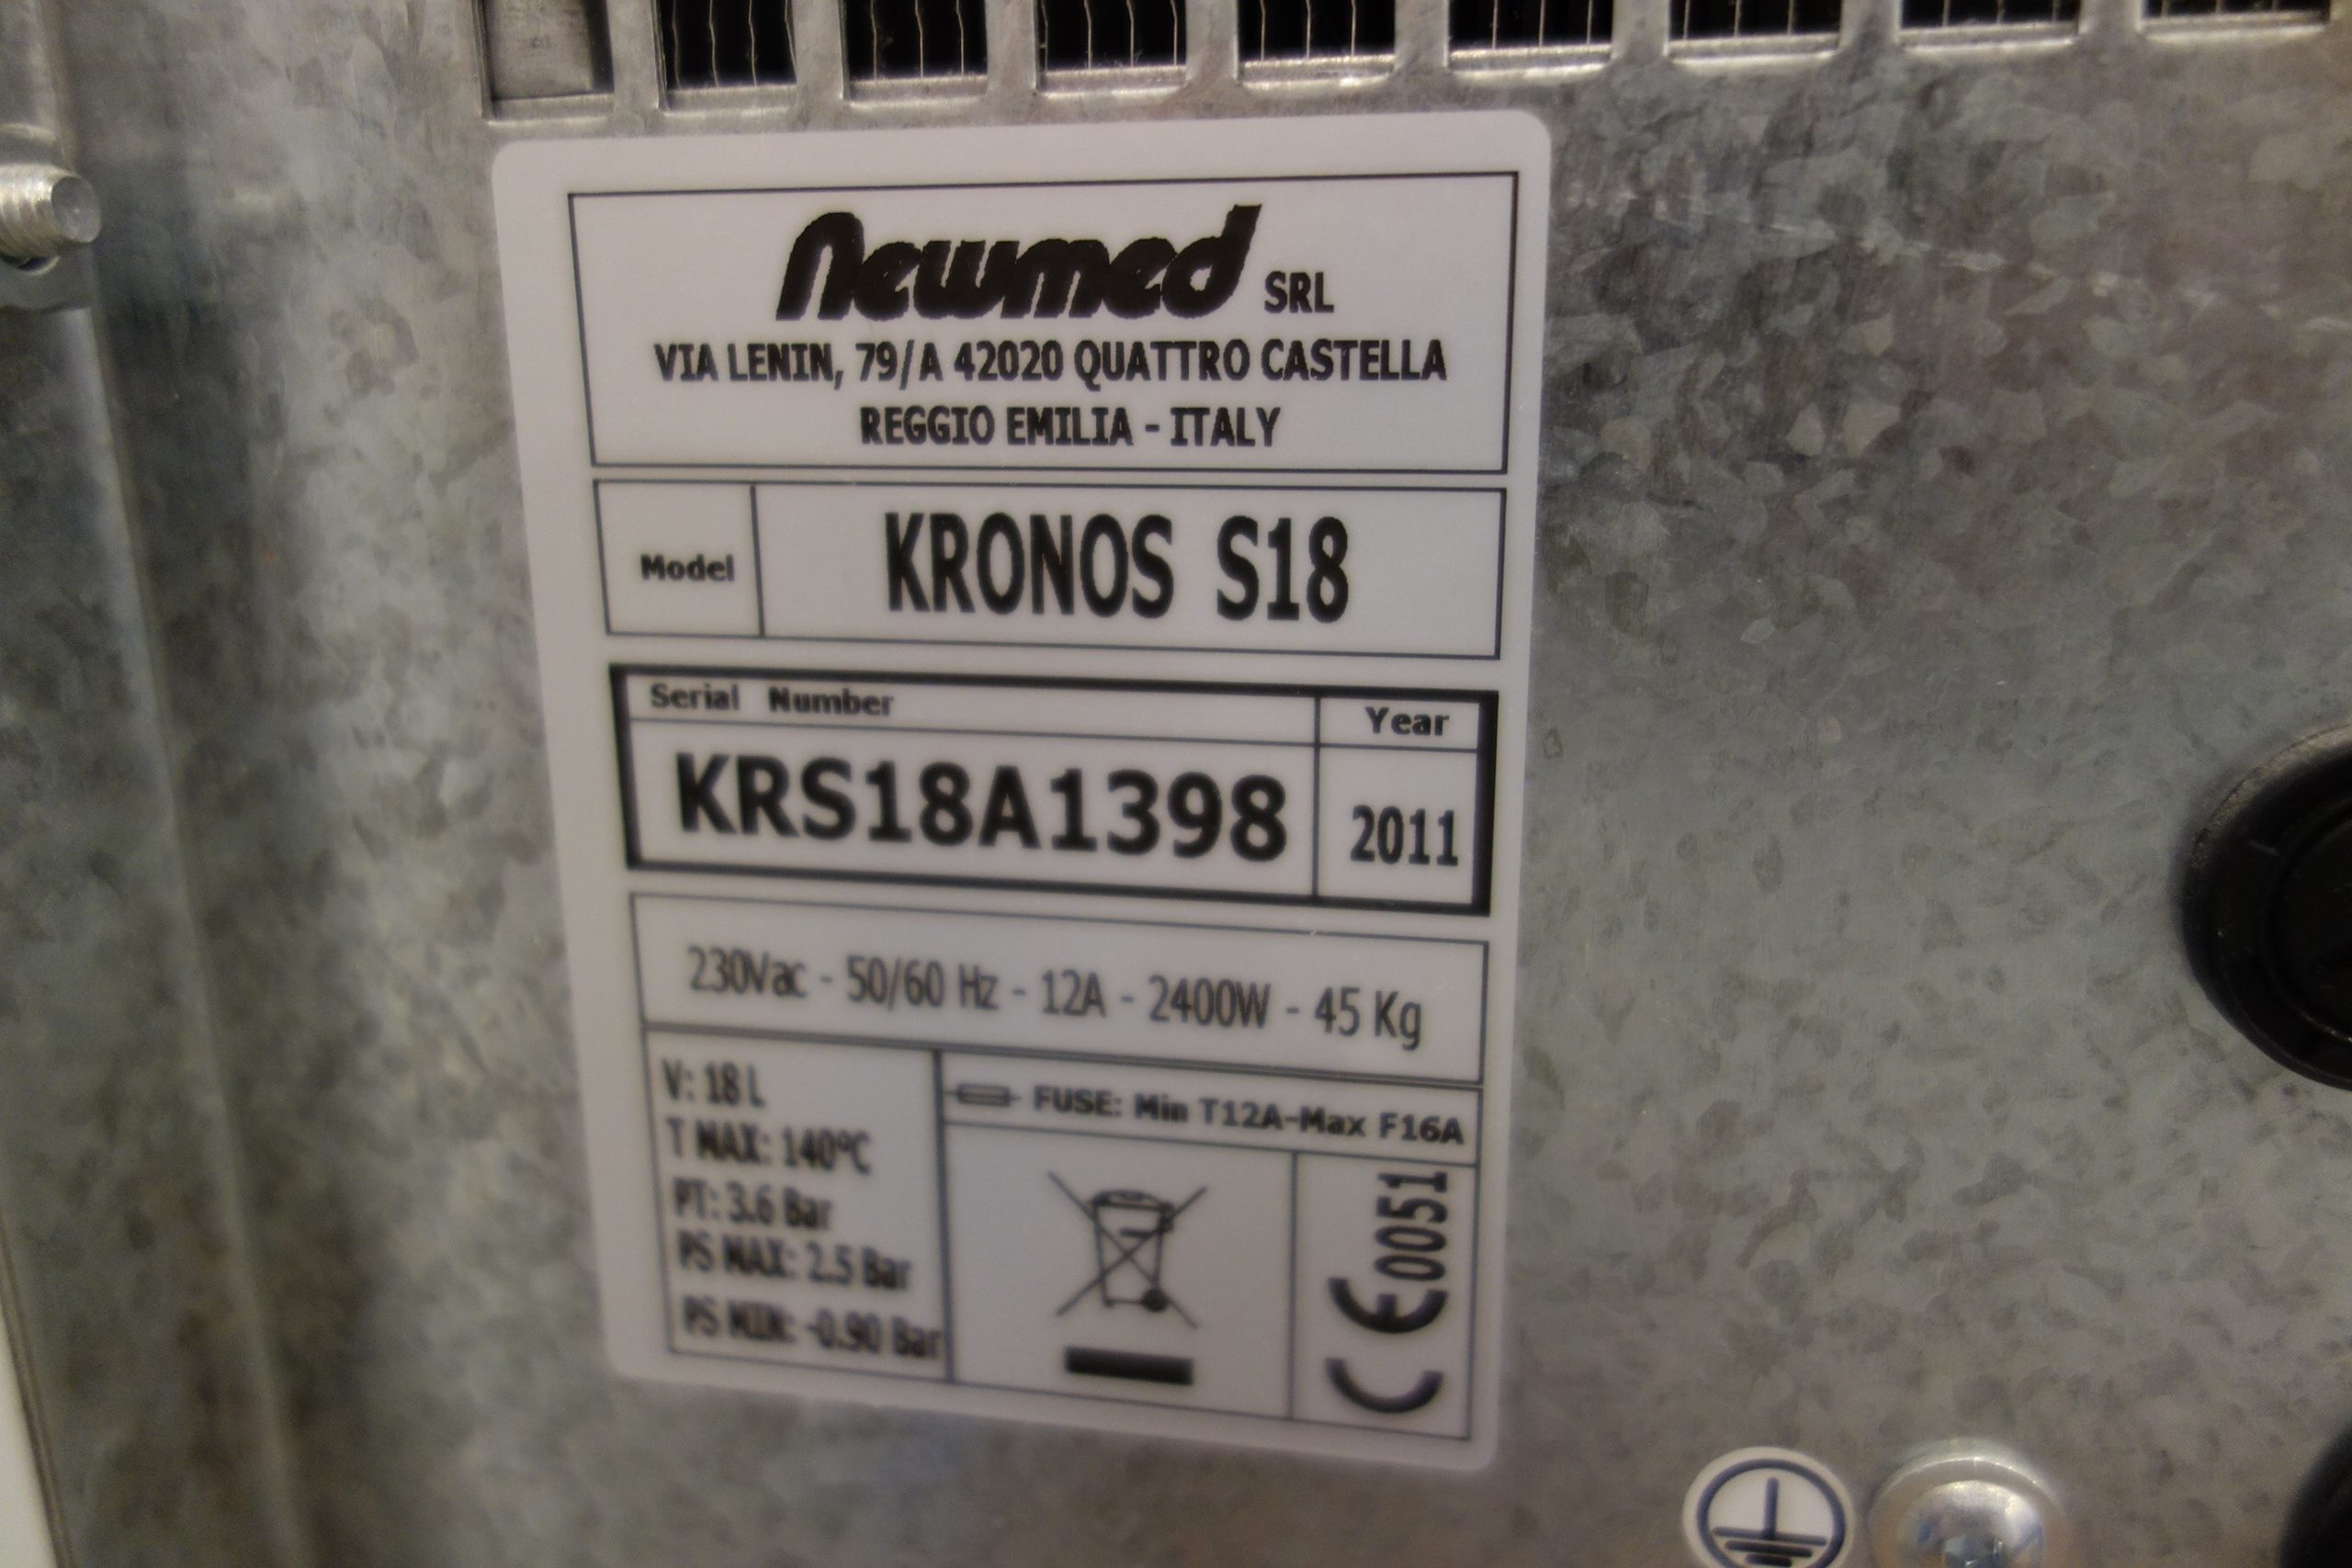 newmed-kronos-s18-sterilisator-434-chargen-5115